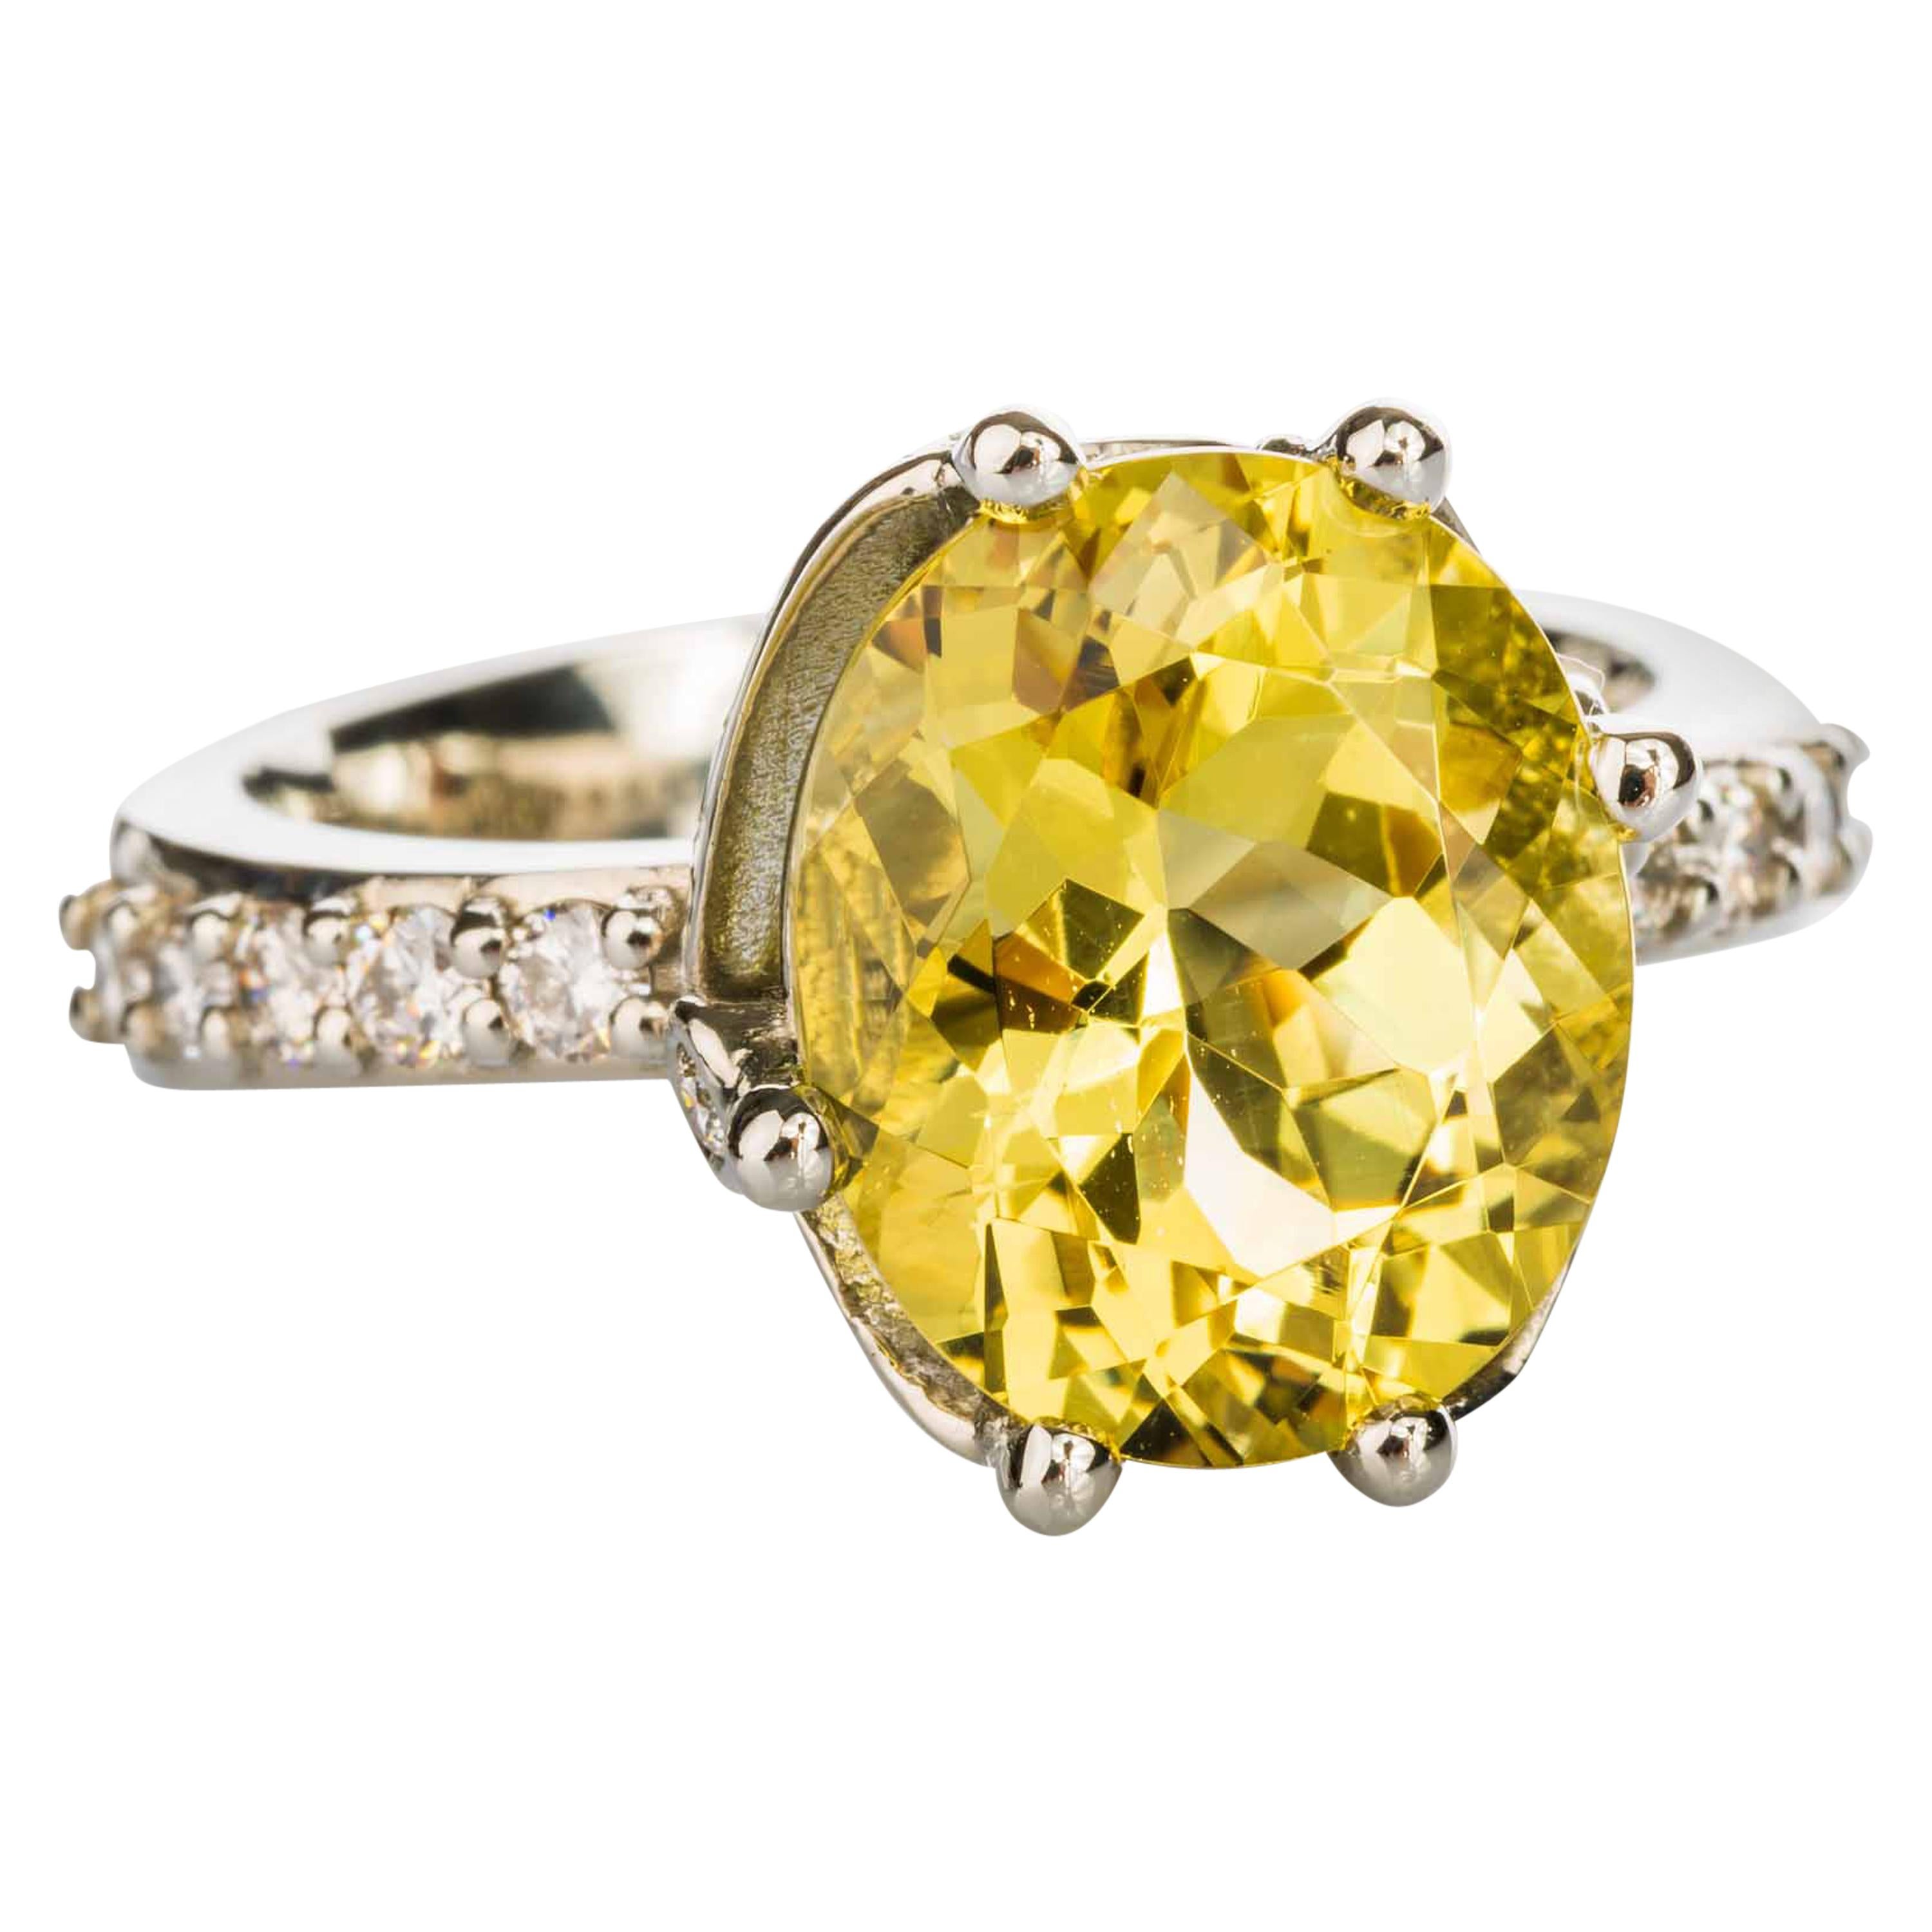 18 Karat White Gold 4.7 Carat Yellow Beryl Ring with White Diamonds